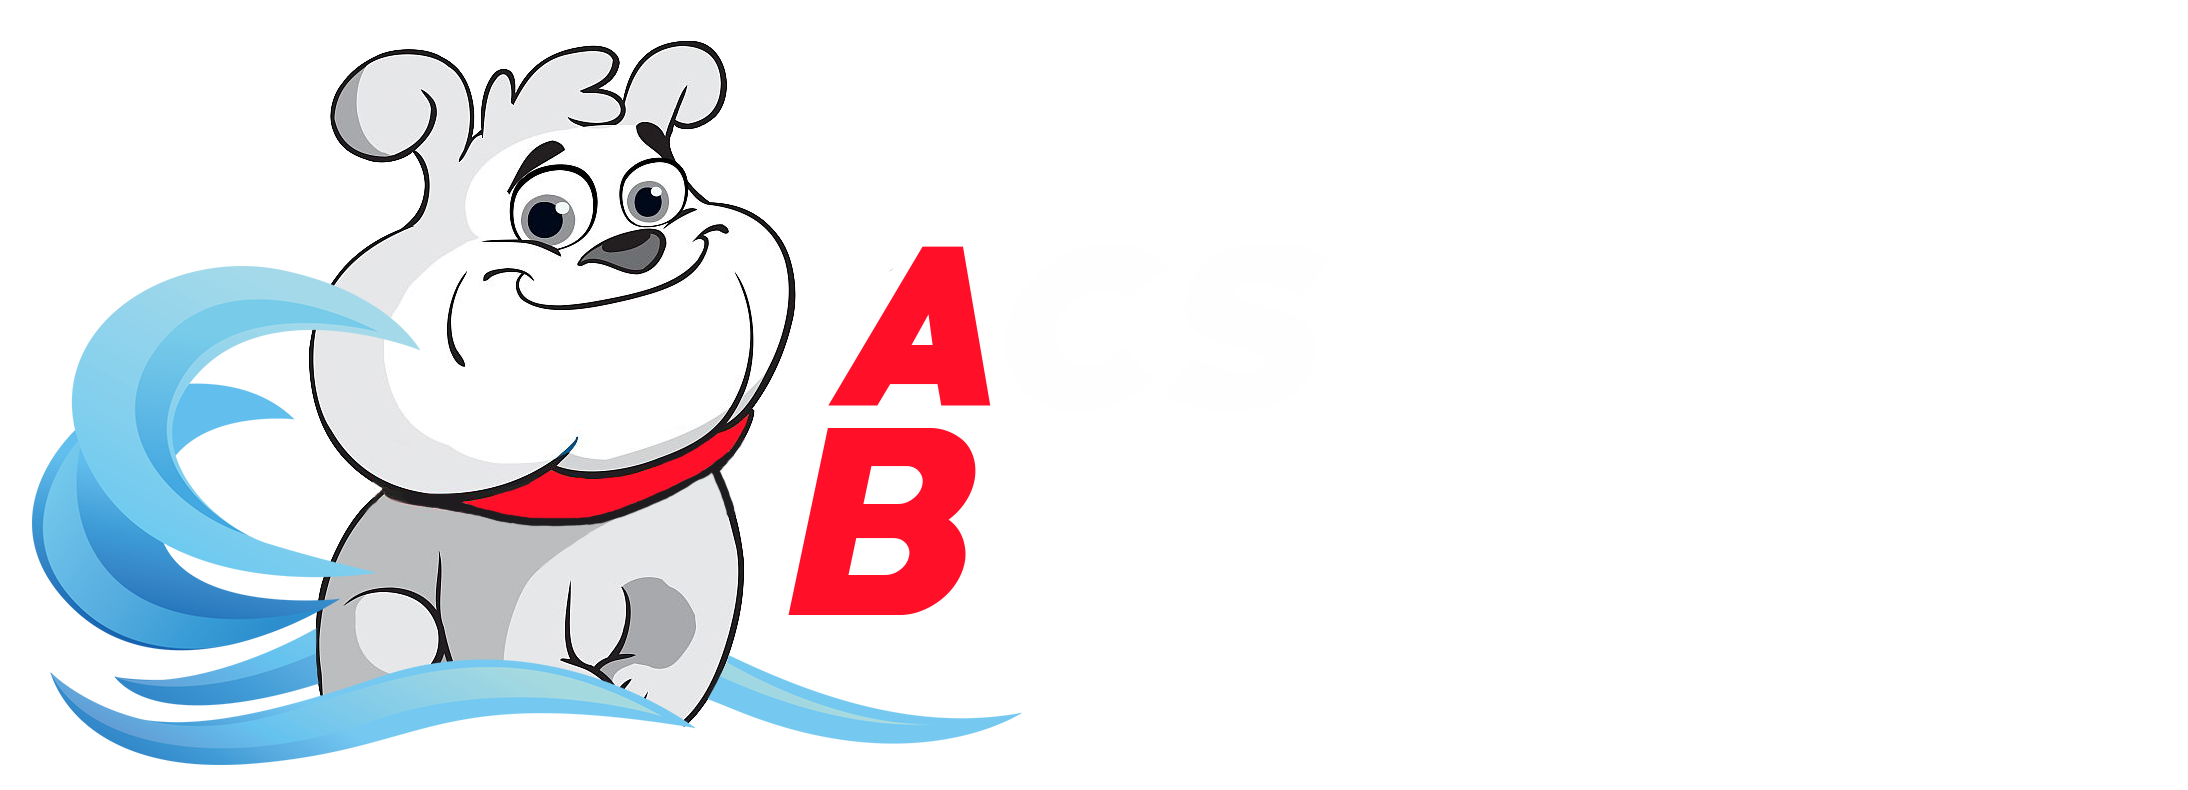 ACS Bulldogs - Club Sportiv